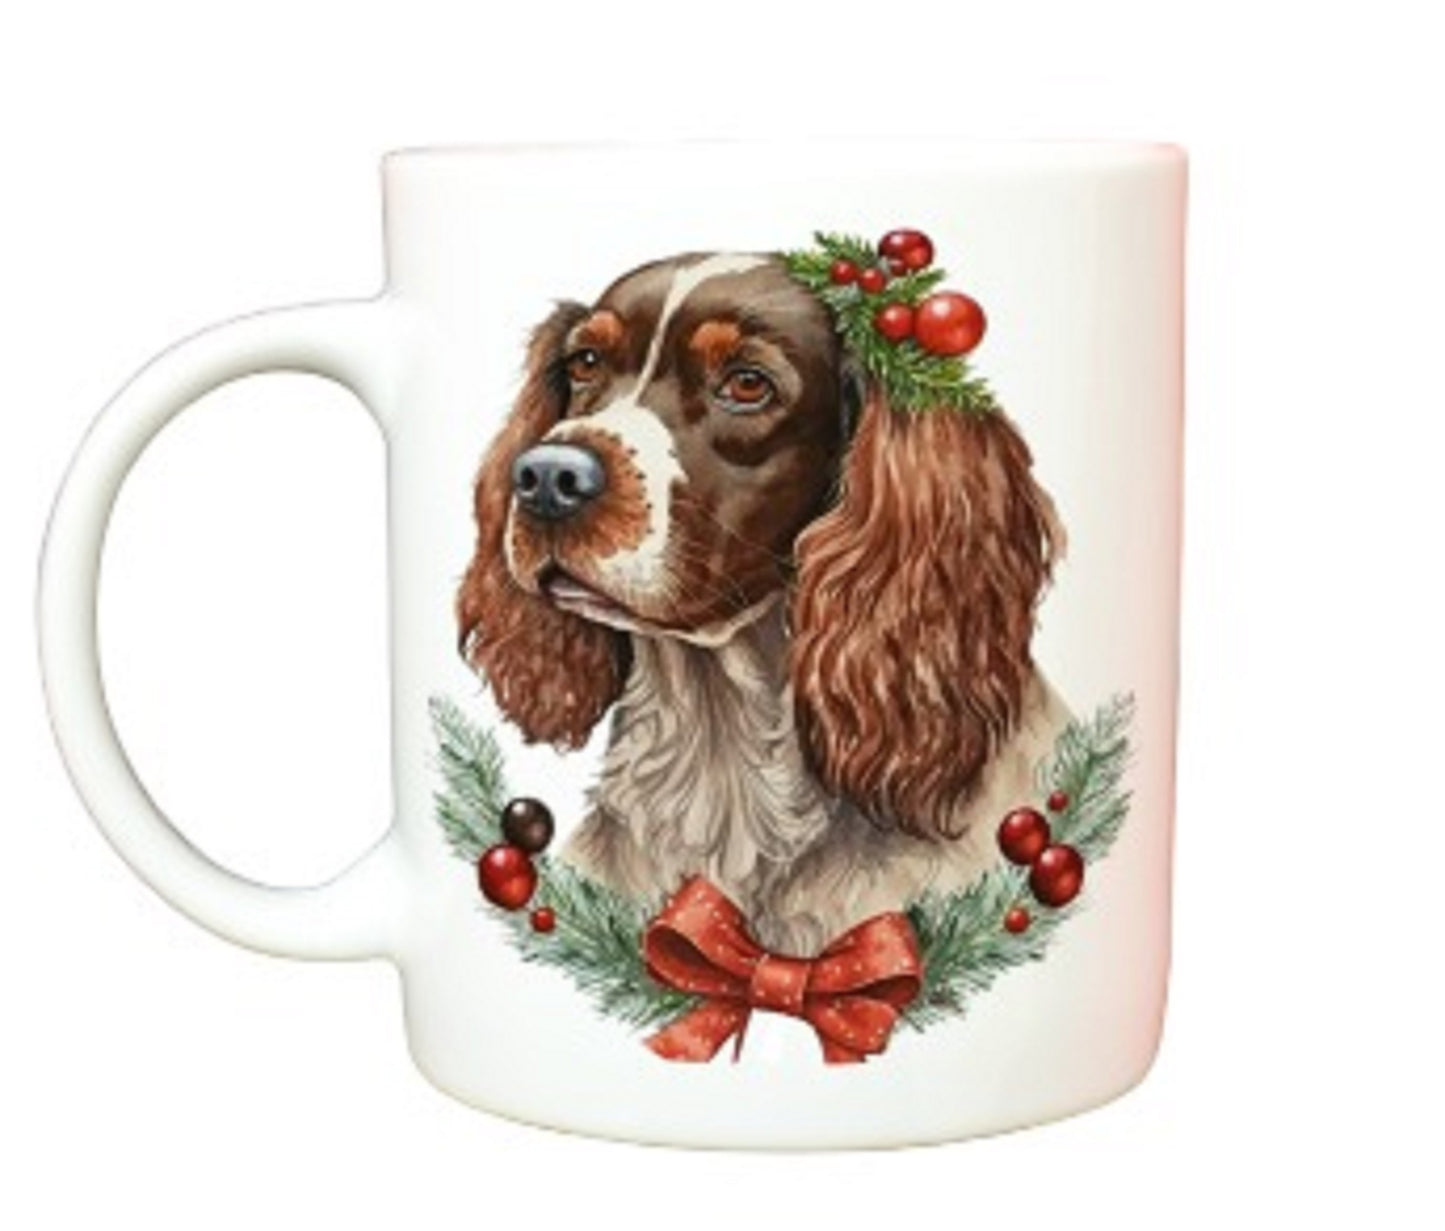  Christmas Spaniel Dog Mug by Free Spirit Accessories sold by Free Spirit Accessories